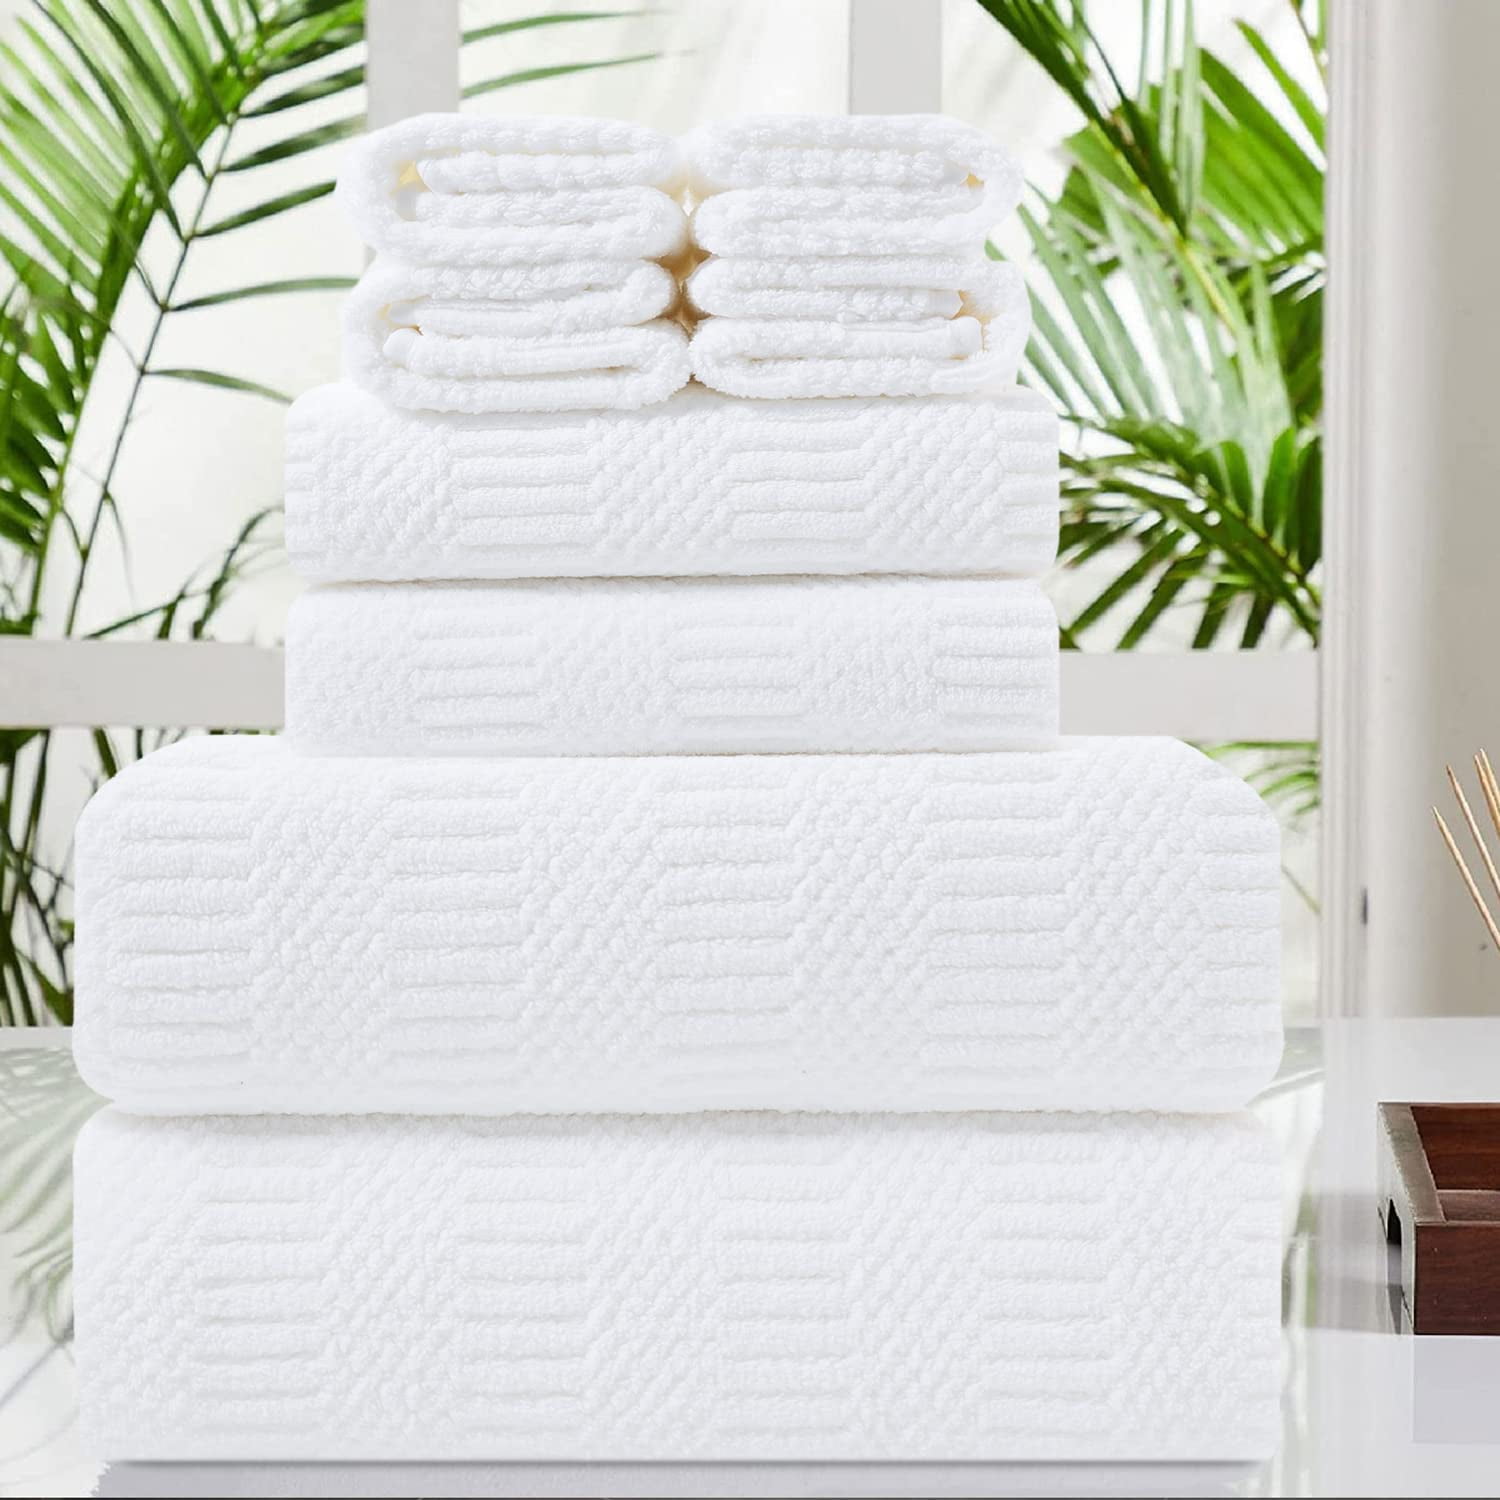 Jessy Home Navy Blue Bath Towel set of 8, 2 Oversized Bath Towels, 2 Hand  Towels, 4 Washcloths-600 GSM Soft Towel Set